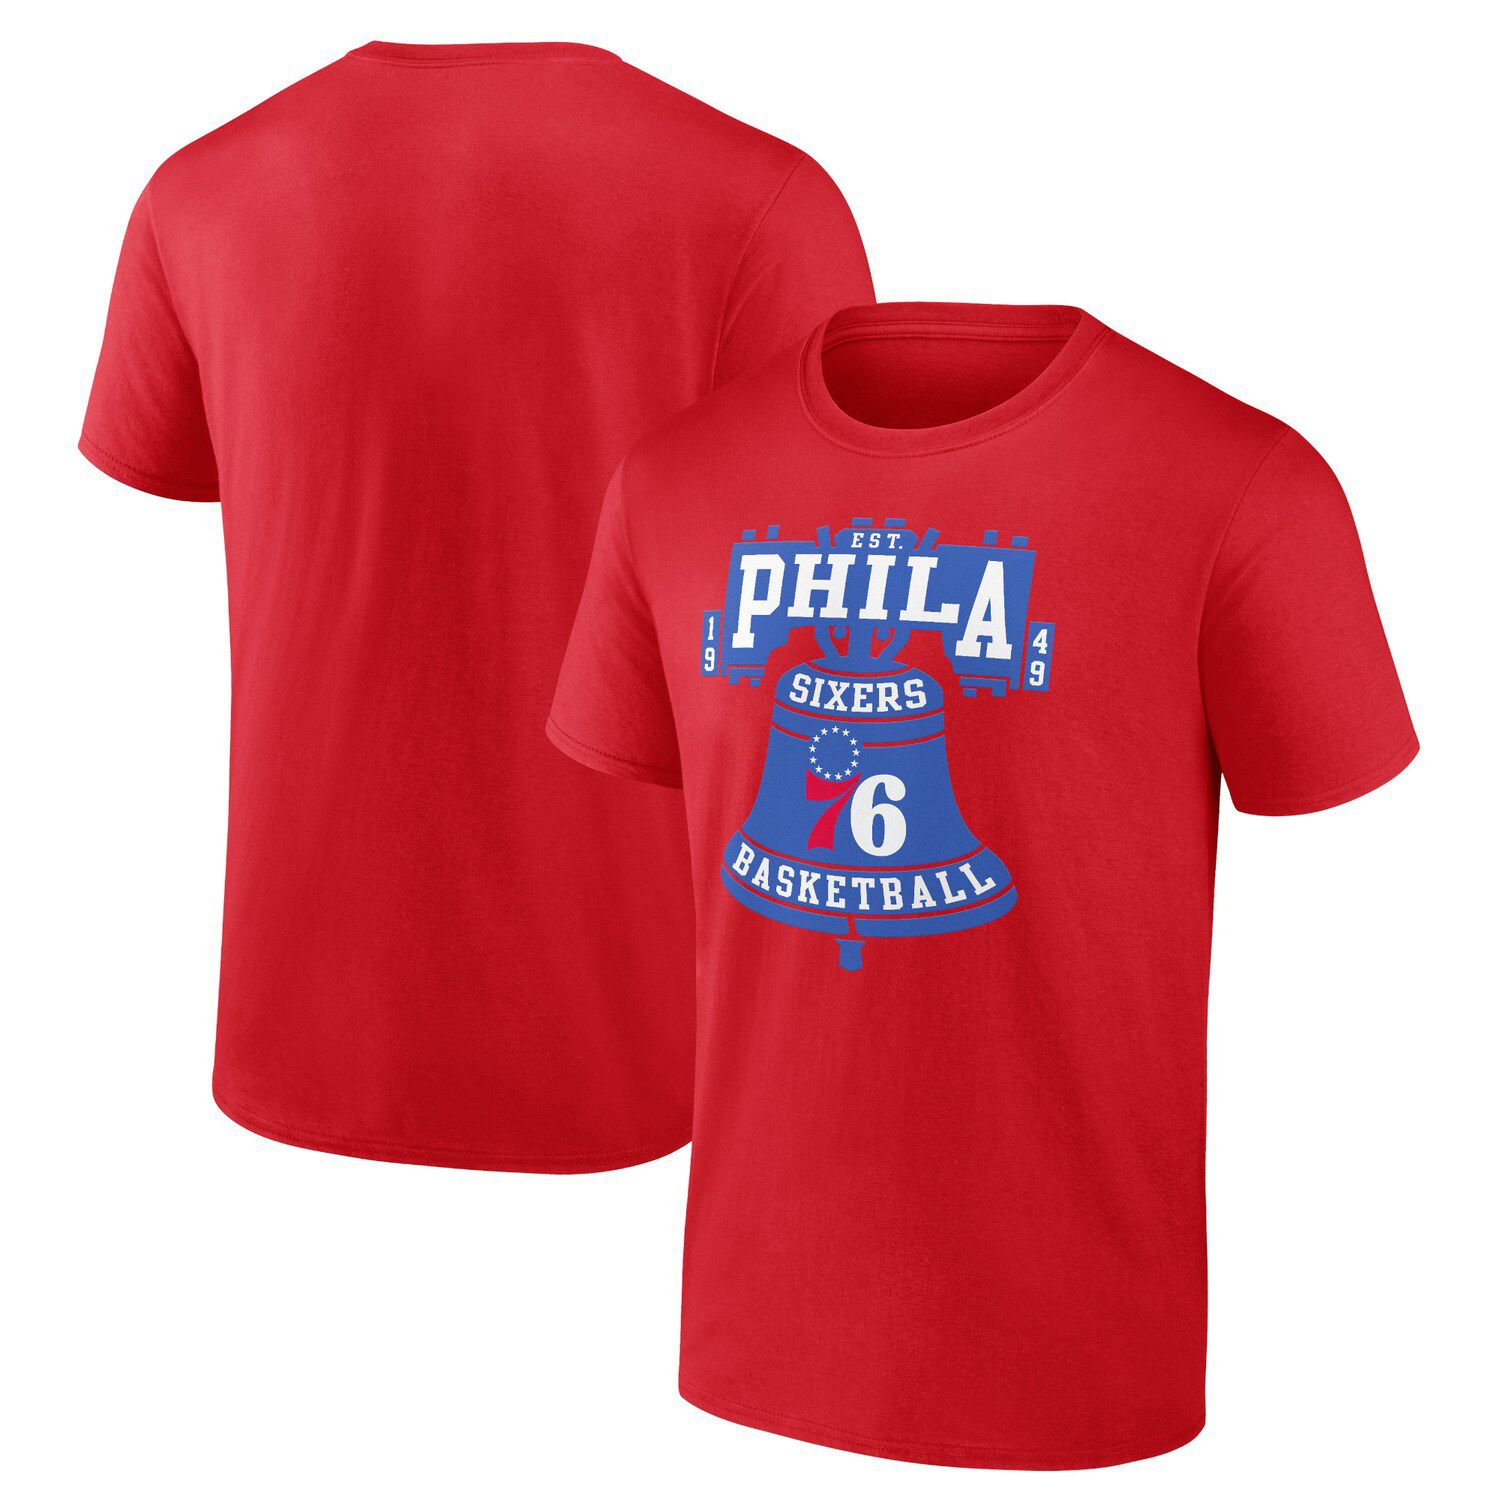 Vintage Philadelphia 76ers EST 1946 Logo Sweatshirt, Sixers